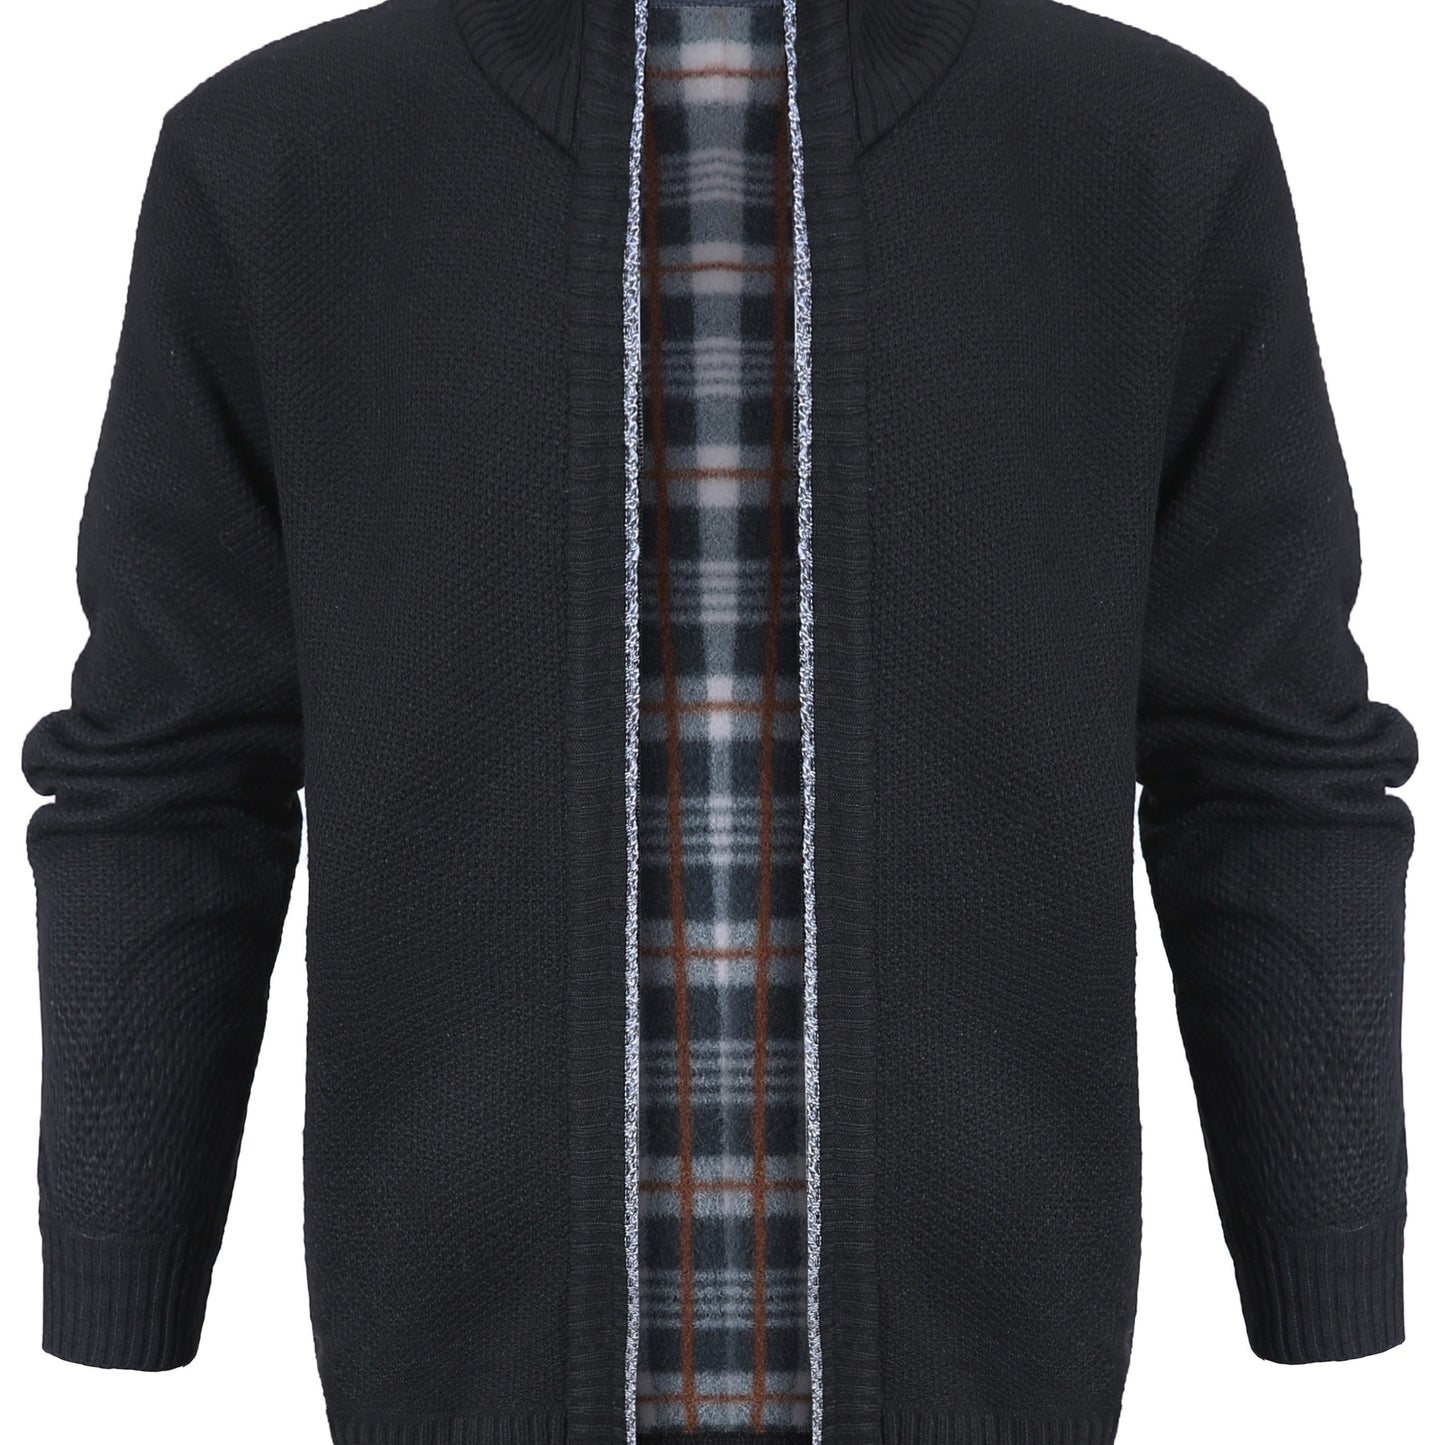 Foruwish - Warm Zip Up Jacket Sweater, Men's Casual Lapel Slant Pocket Solid Color Cardigan For Fall Winter